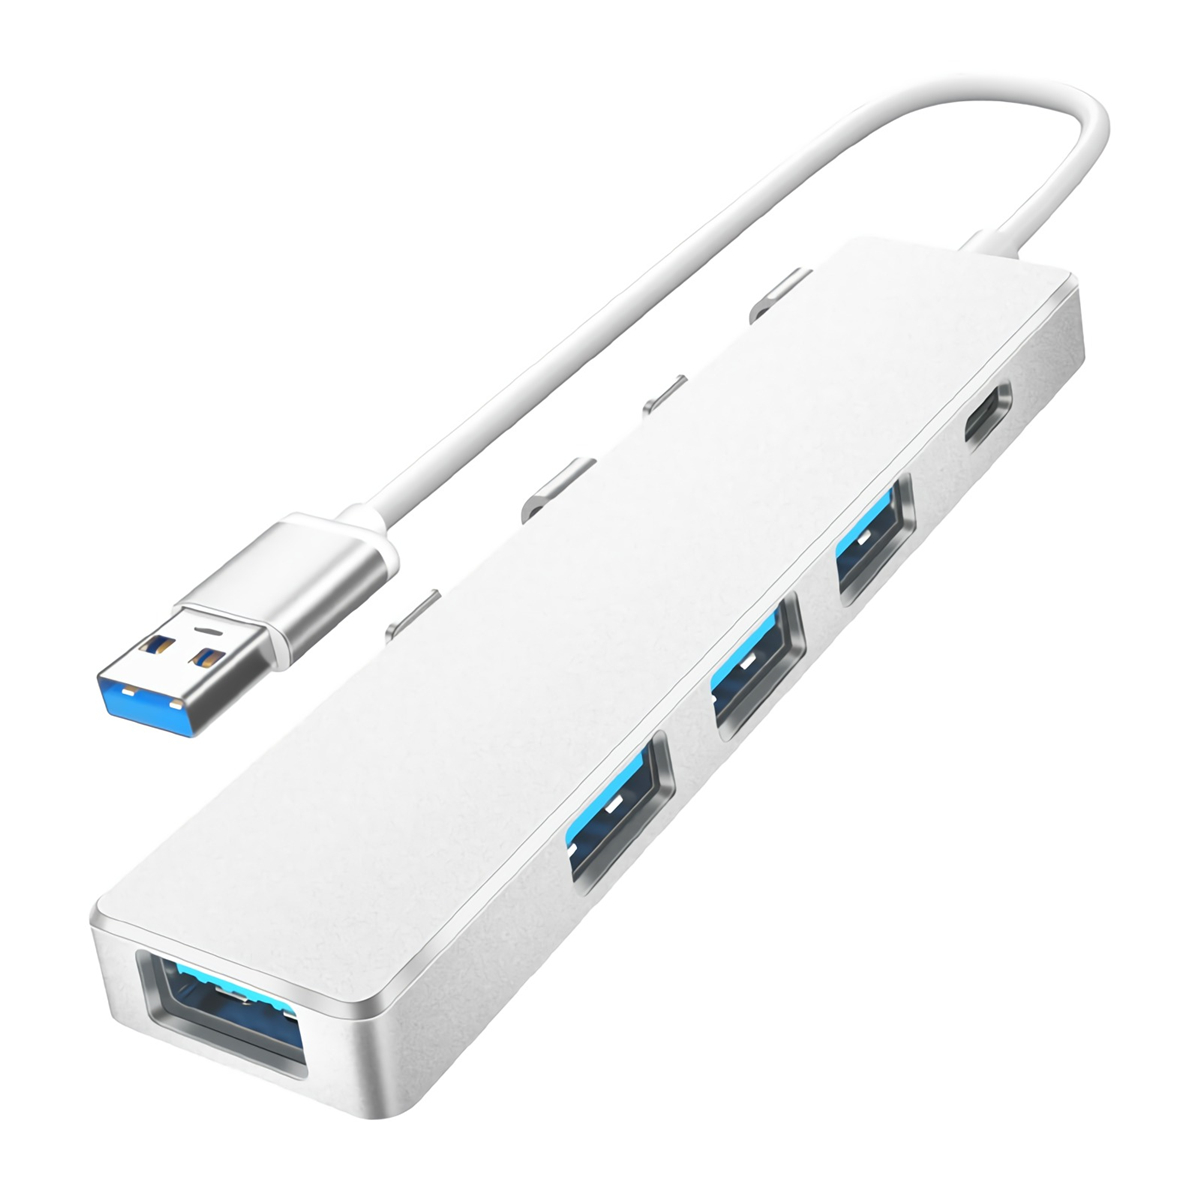 5-in-1 USB3.0 Hub USB 3.0/2.0 5Gbps High Speed USB Splitter USB Adapter Converter Type-C Charging Docking Station for Laptop PC 